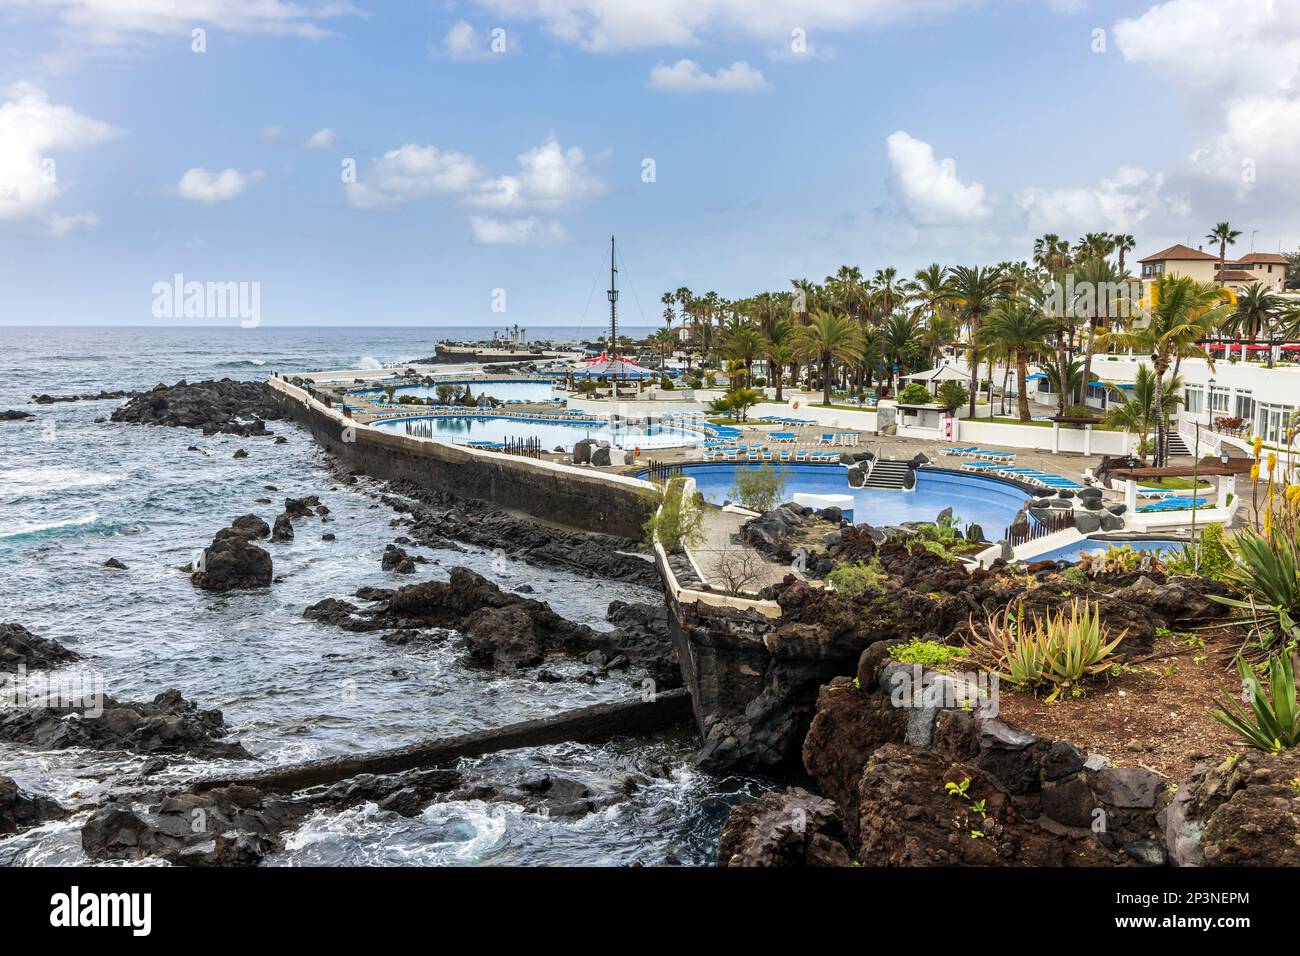 Complexe de bord de mer et piscine à Puerto de la Cruz, Tenerife, Iles Canaries Banque D'Images